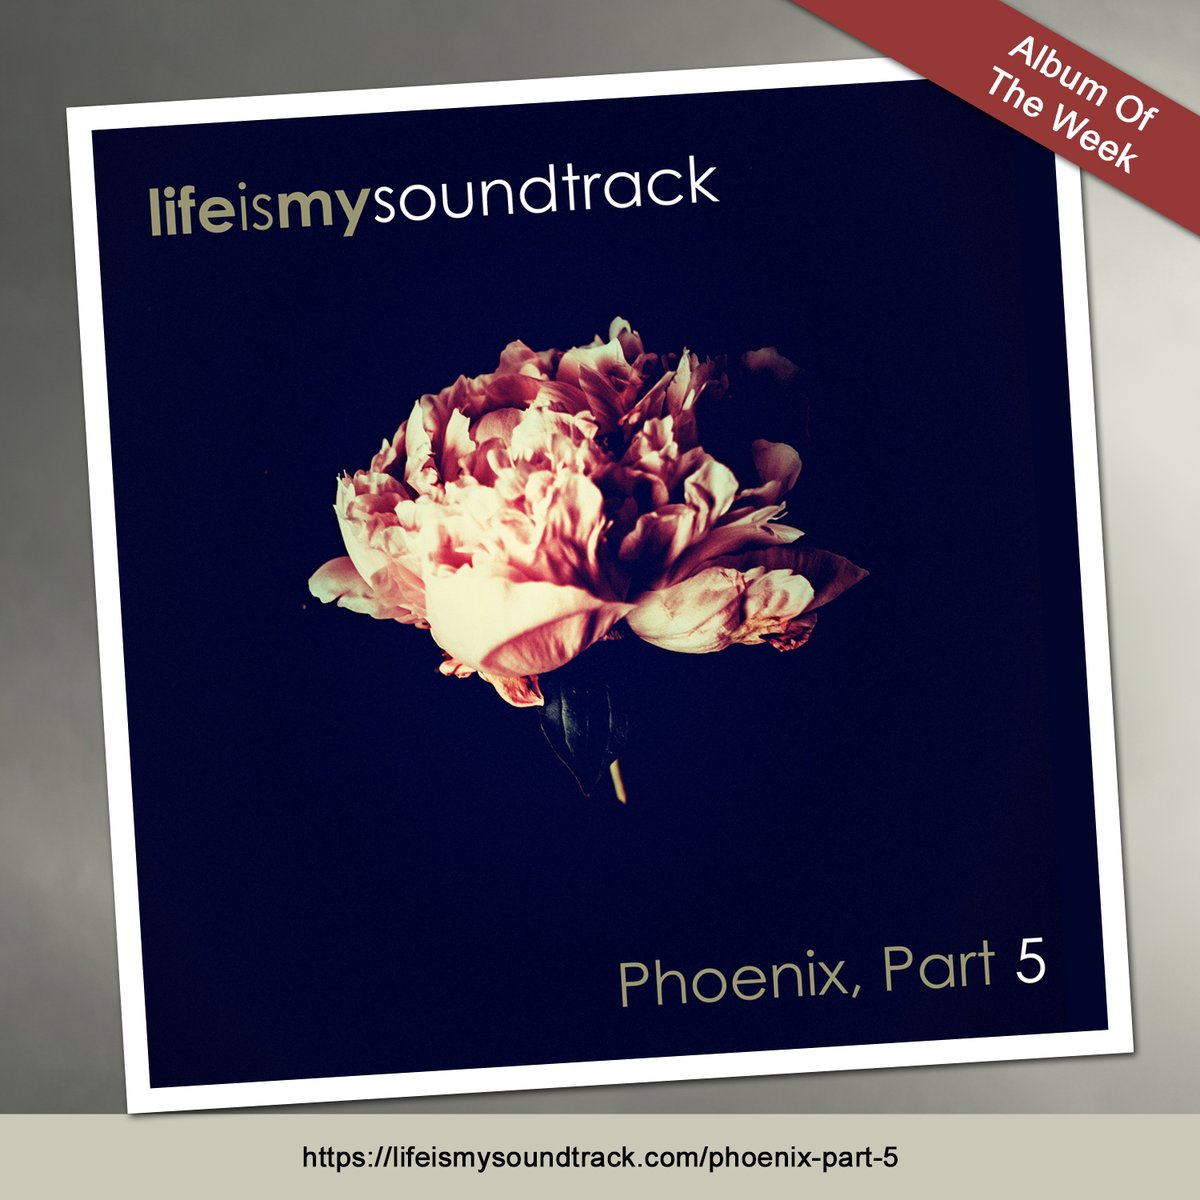 The LIMS album of the week is Phoenix, Part 5
lifeismysoundtrack.com/phoenix-part-5

#MusicMonday #albumoftheweek #inspiringmusic #chilloutmusic #instrumentalmusic #listenandchill  #downtempo #musicislife #chillwave #chillstep #ambientmusic #meditationmusic #zenmusic #lifeismysoundtrack #lims